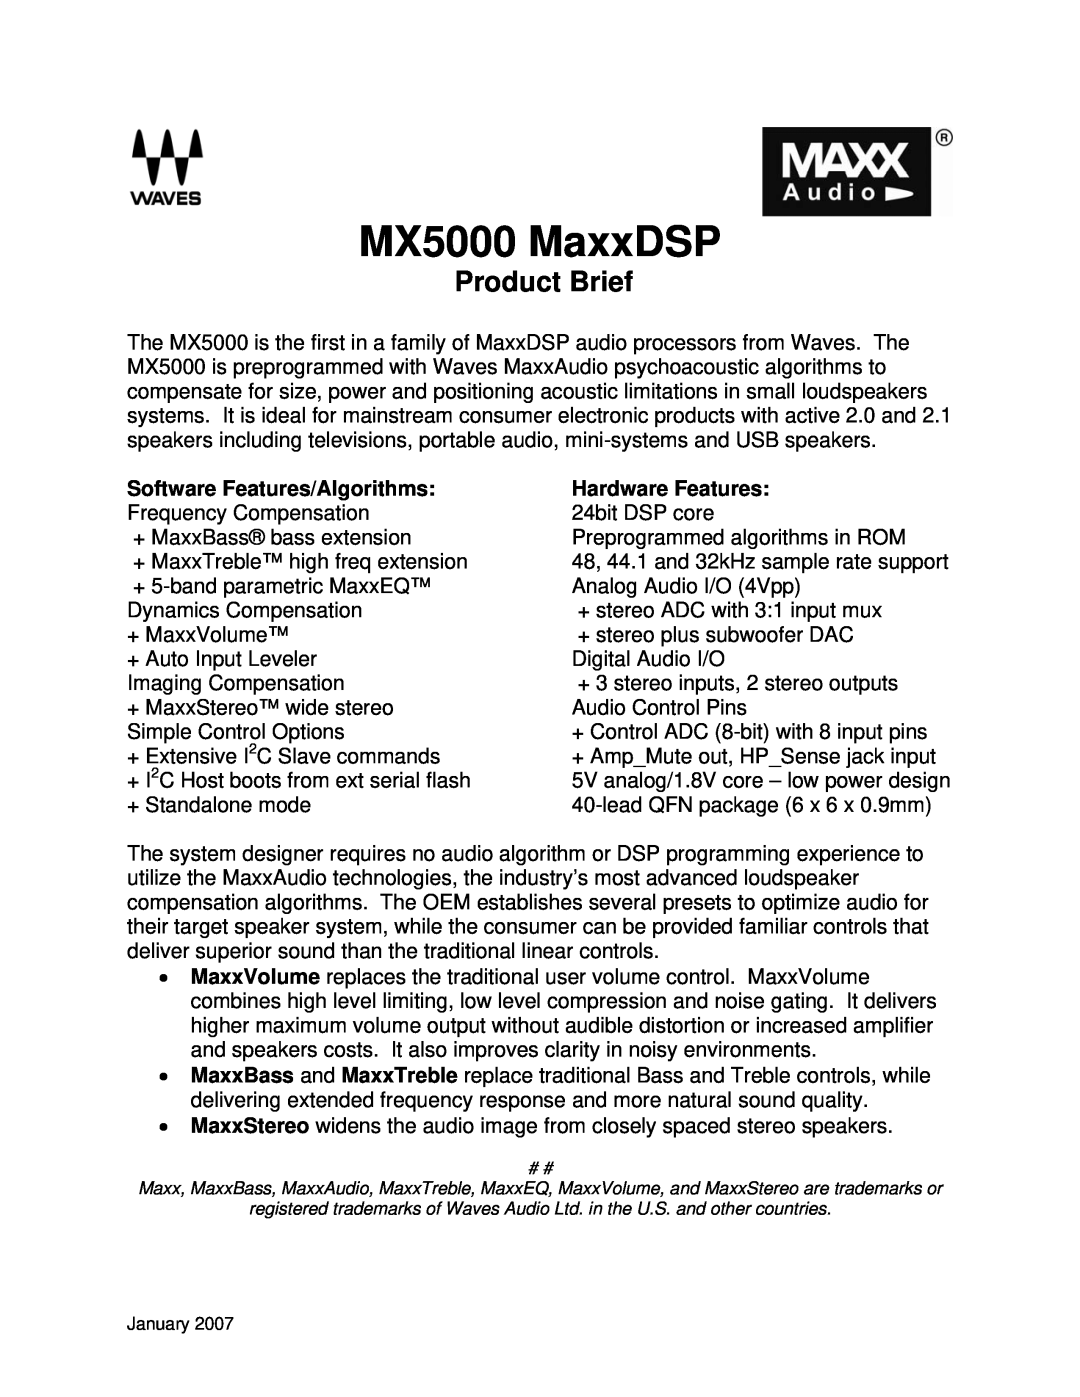 Waves manual Software Features/Algorithms, MX5000 MaxxDSP, Product Brief 